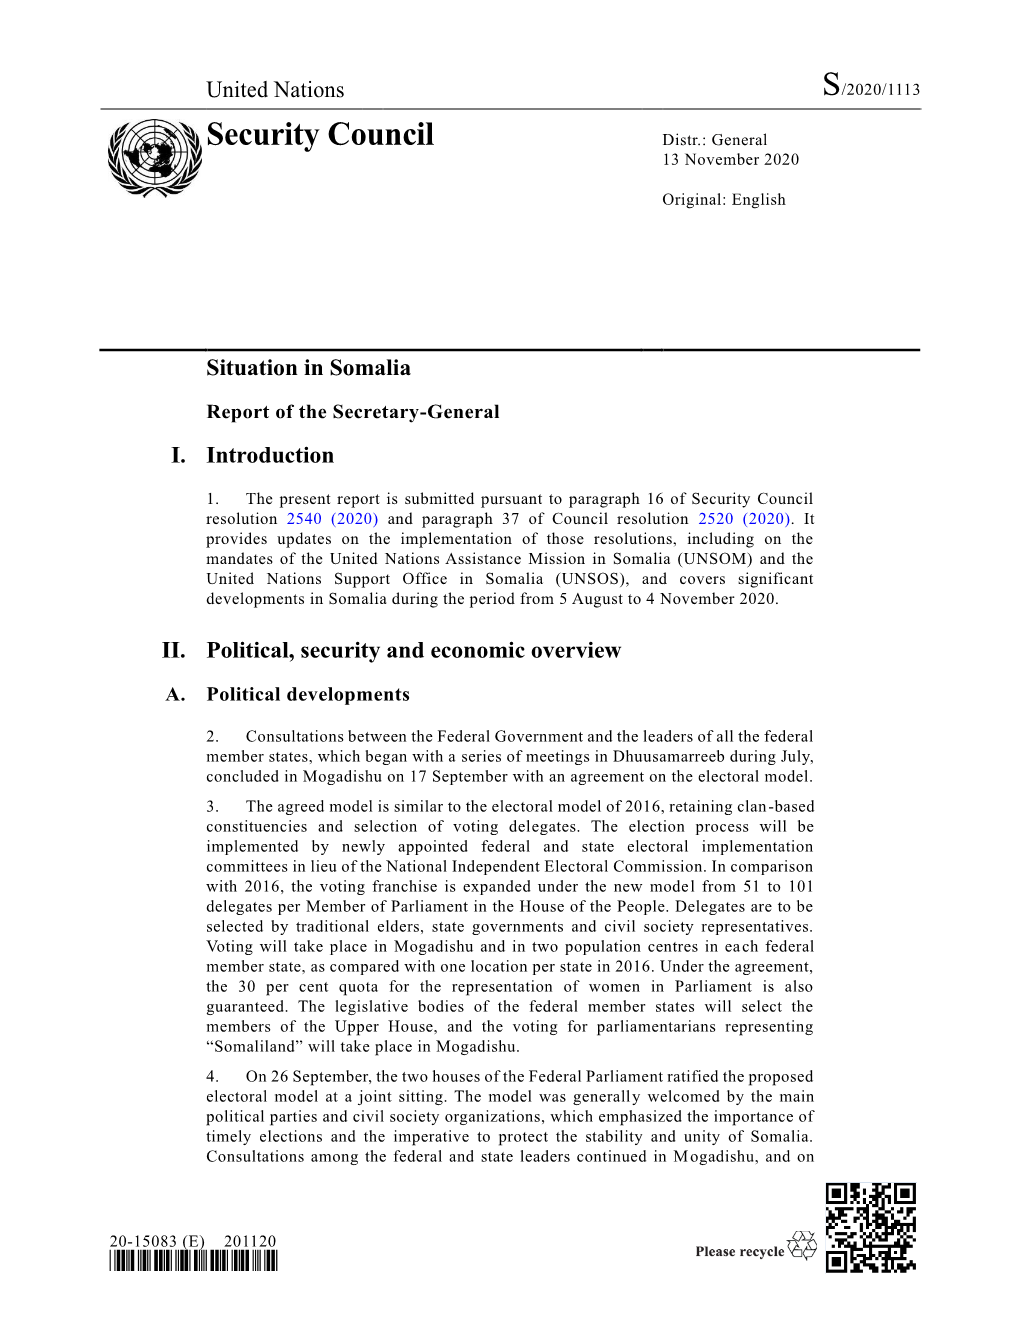 Security Council Distr.: General 13 November 2020